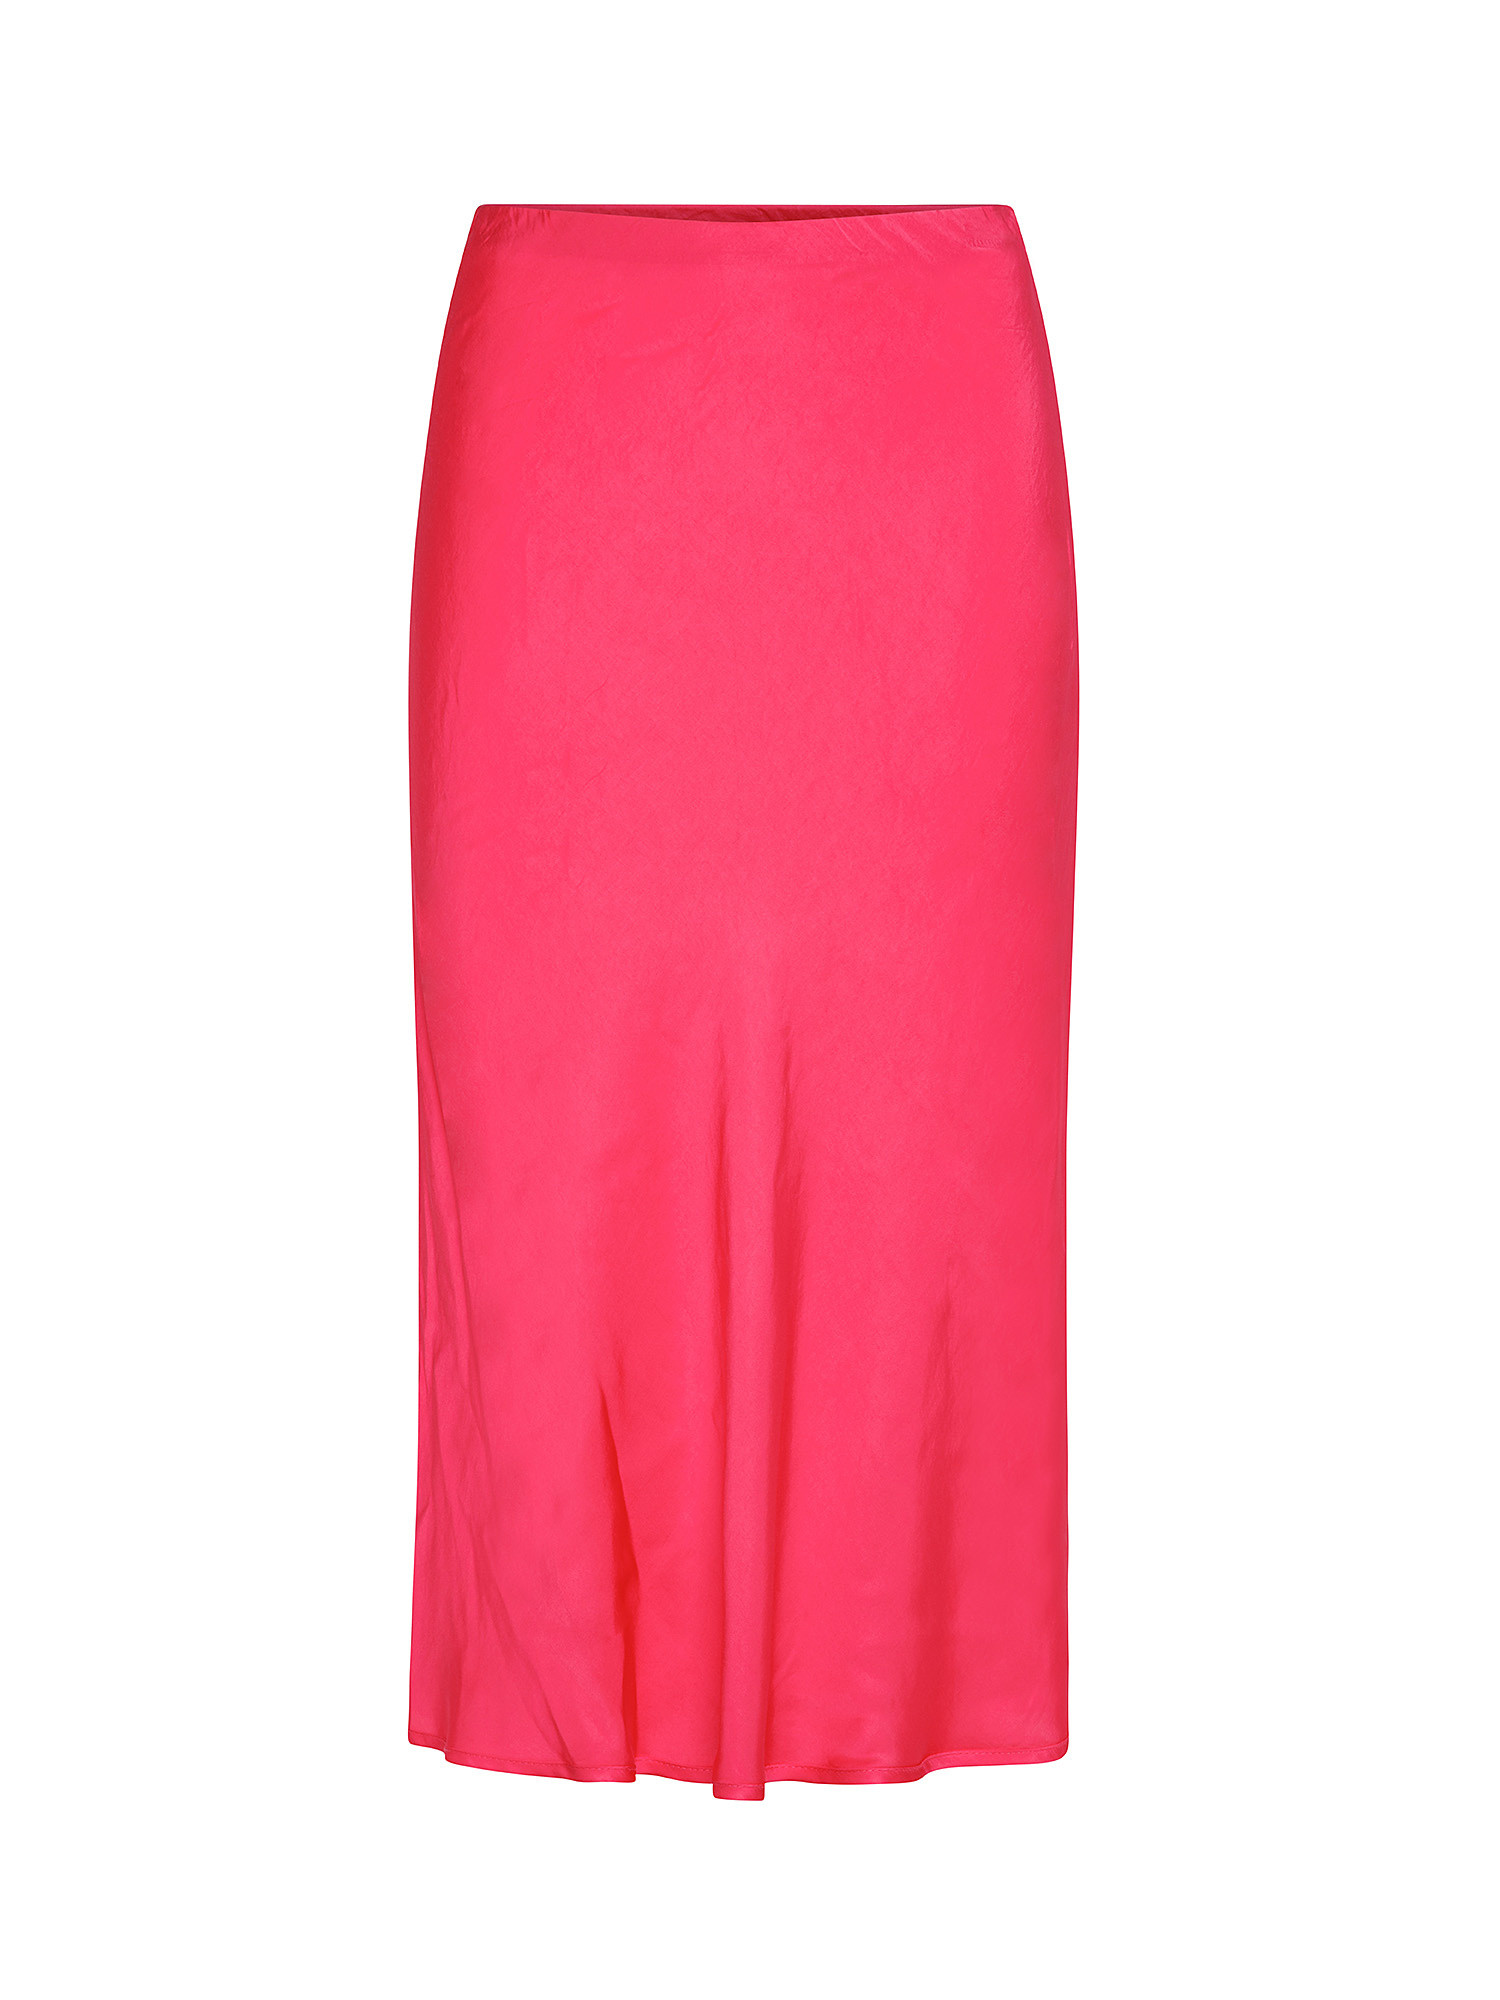 Viscose skirt, Pink Fuchsia, large image number 0